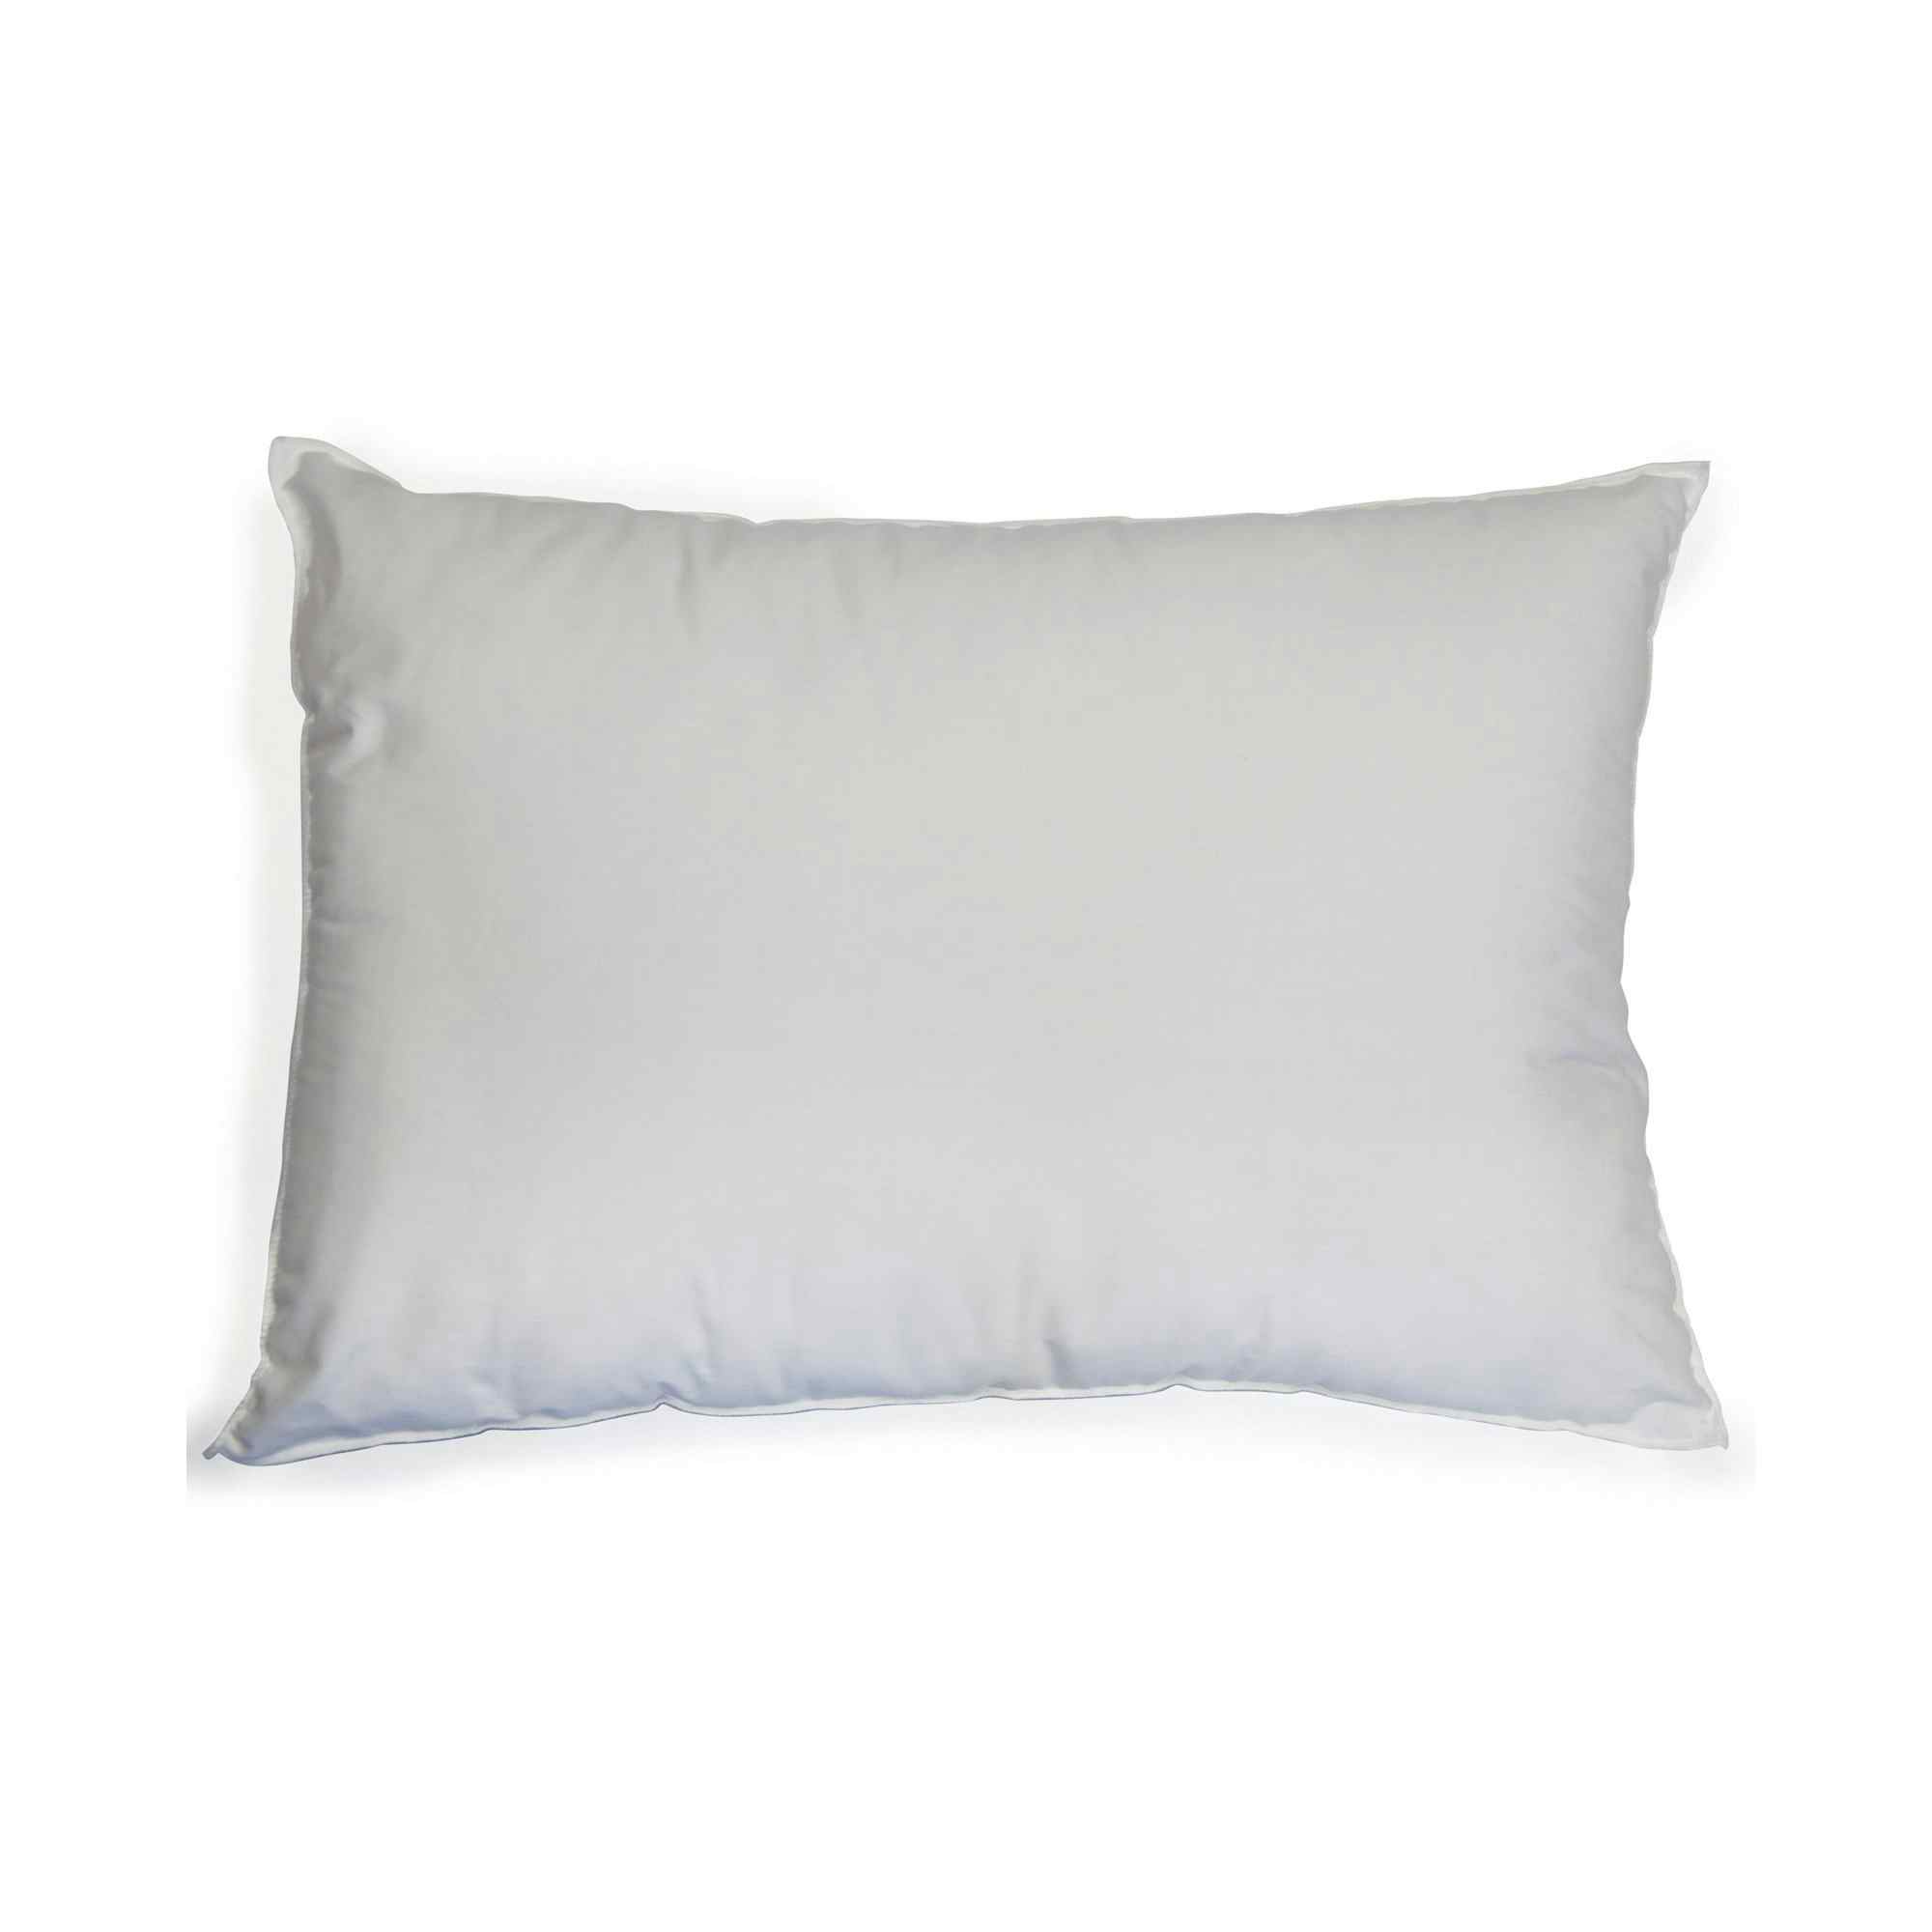 McKesson Bed Pillow, 41-2127-WS, White (21 X 27") - 1 Each